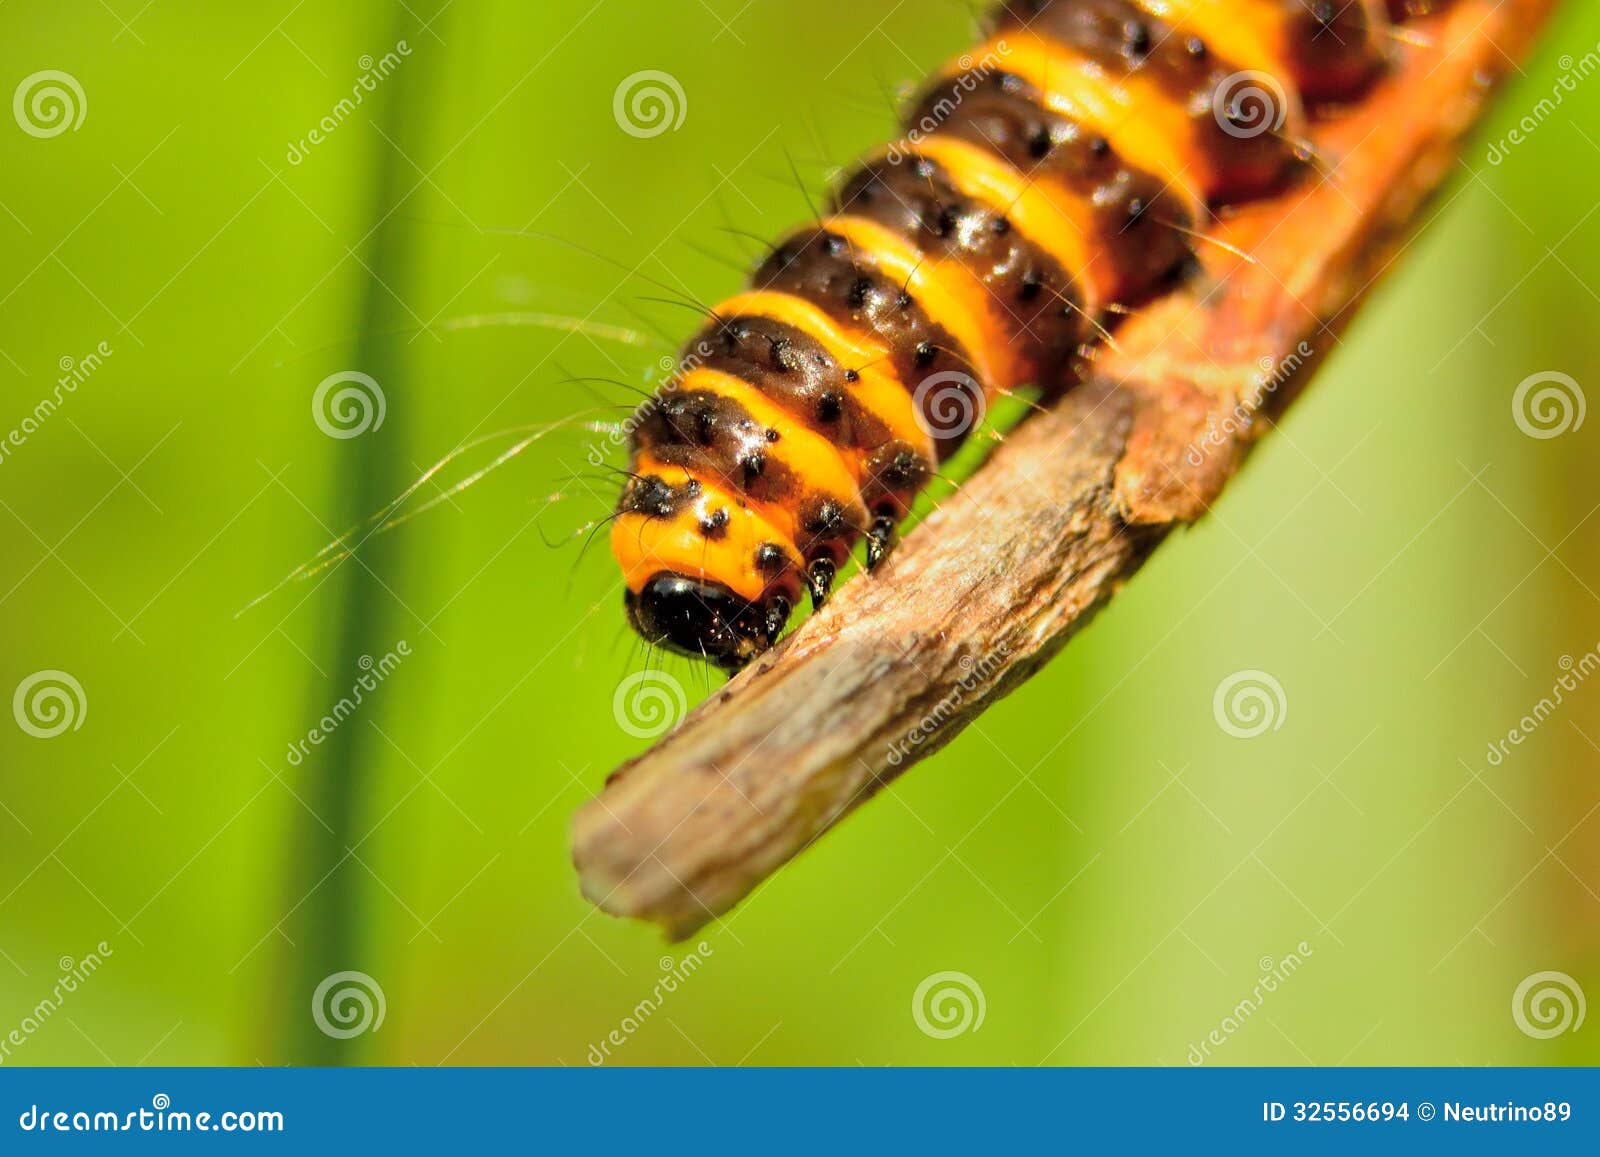 Orange And Black Cinnabar Moth Caterpillars Stock Photo Image Of Cinnabar Insect